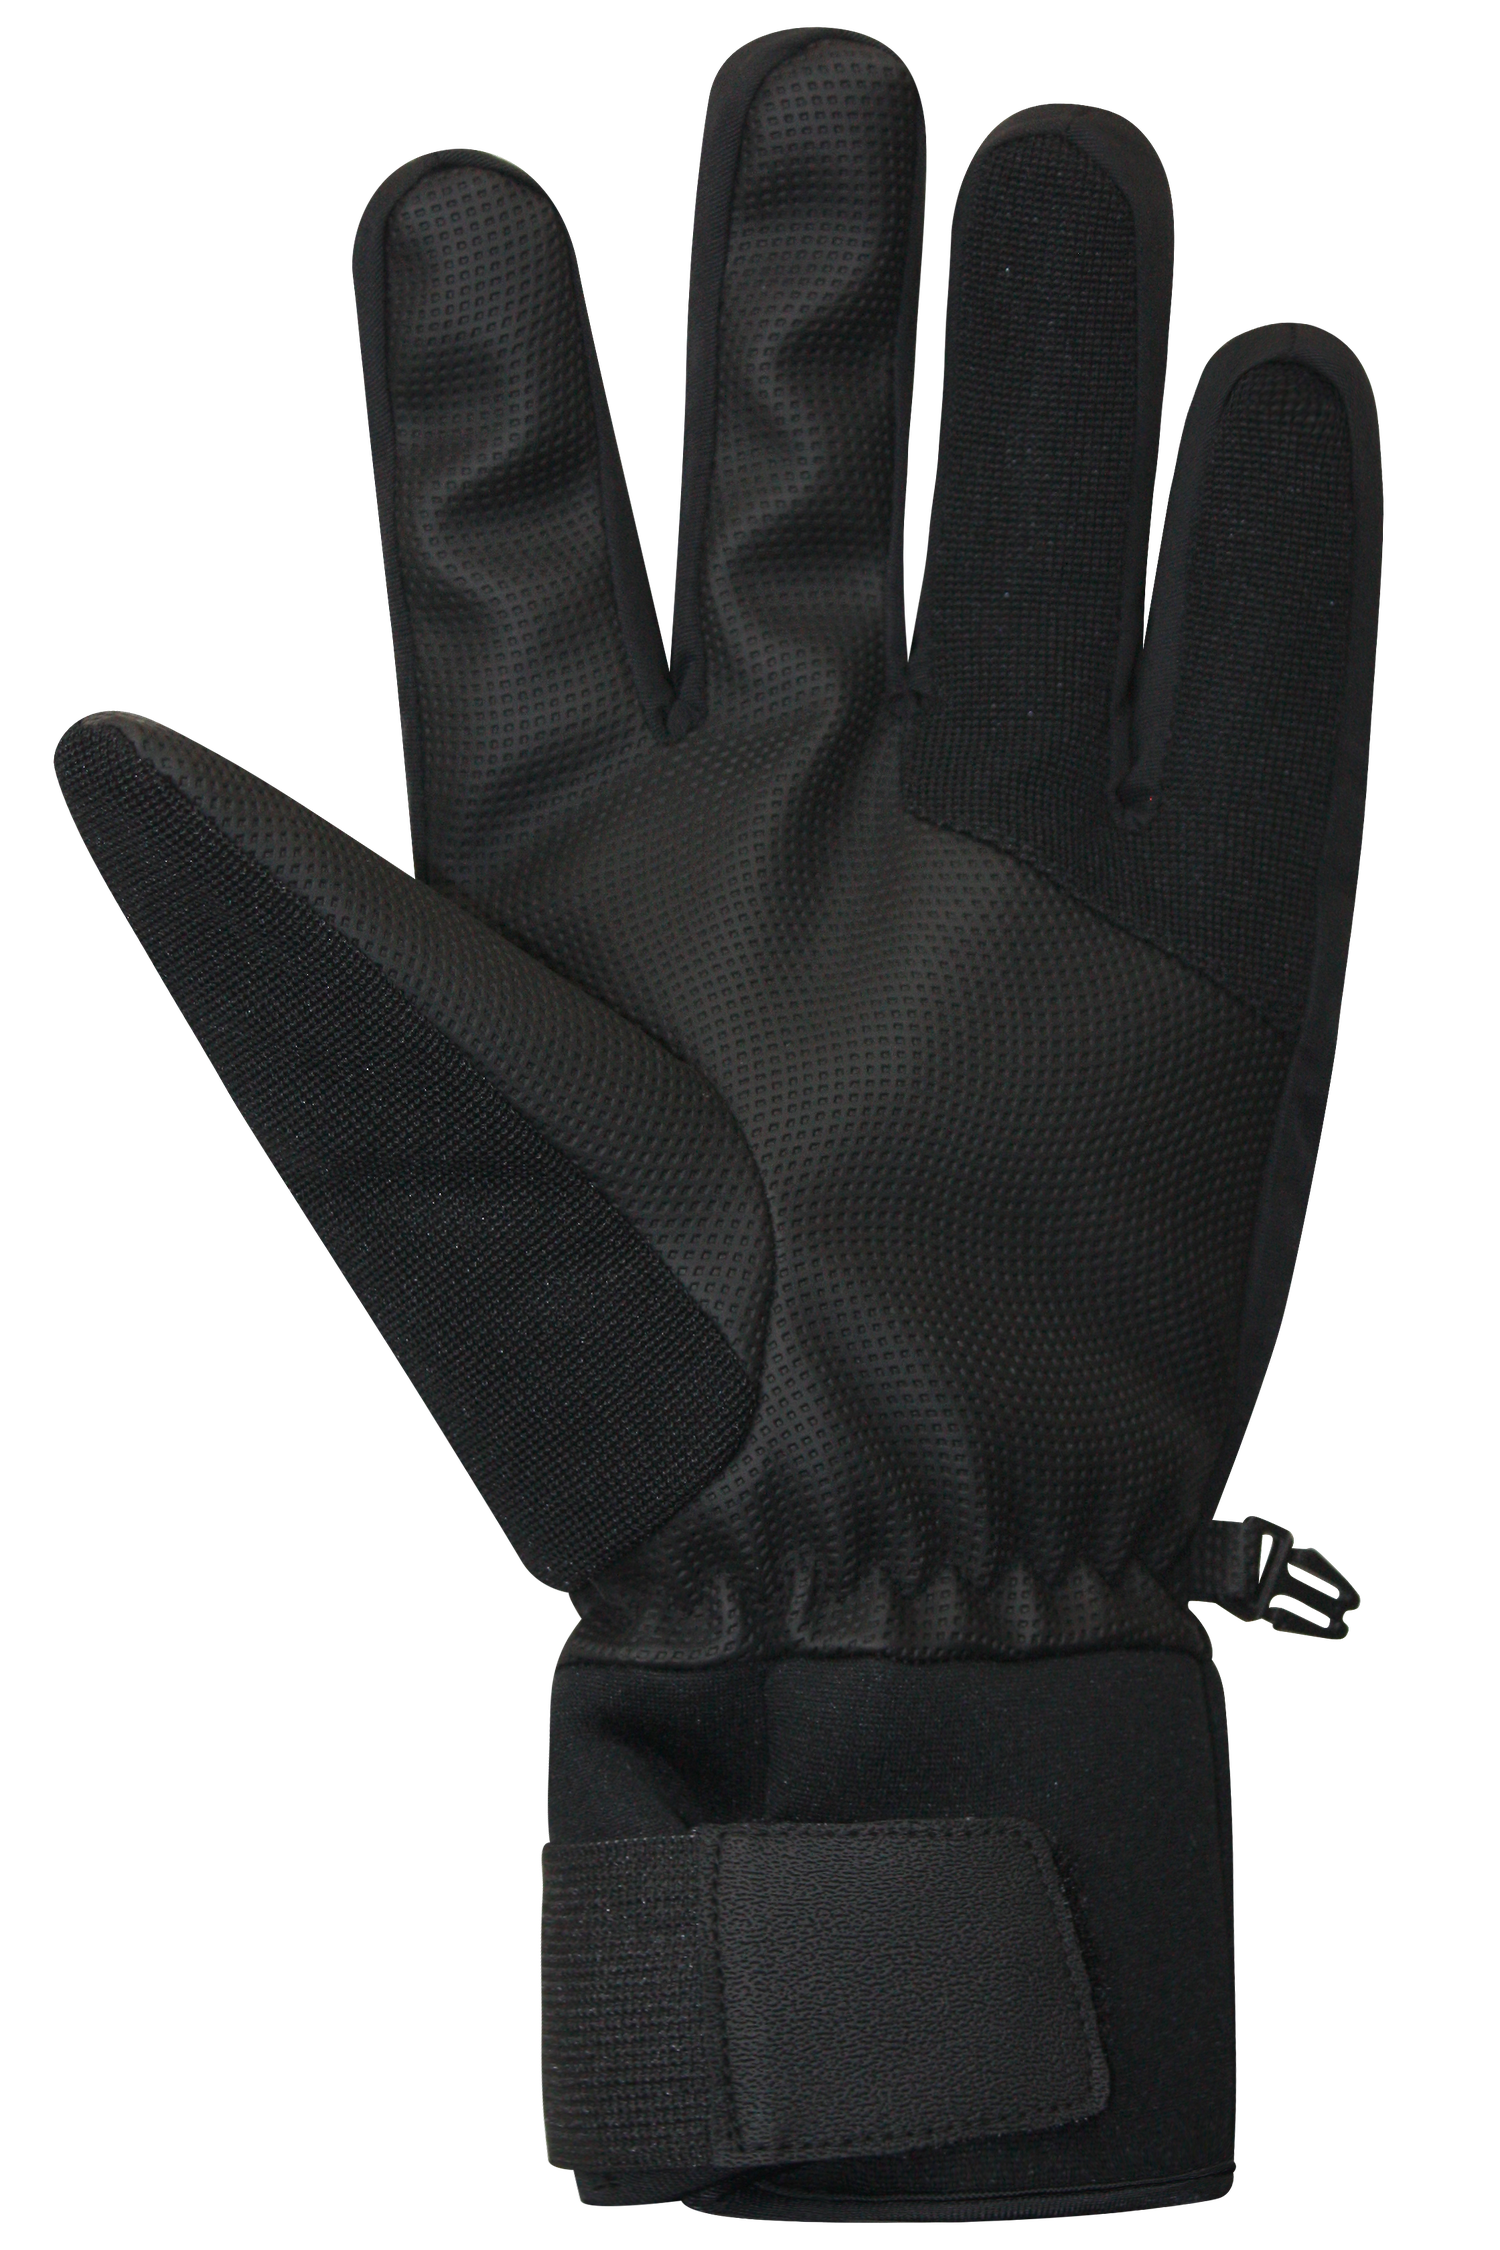 Parabolic Gloves - Adult, Black